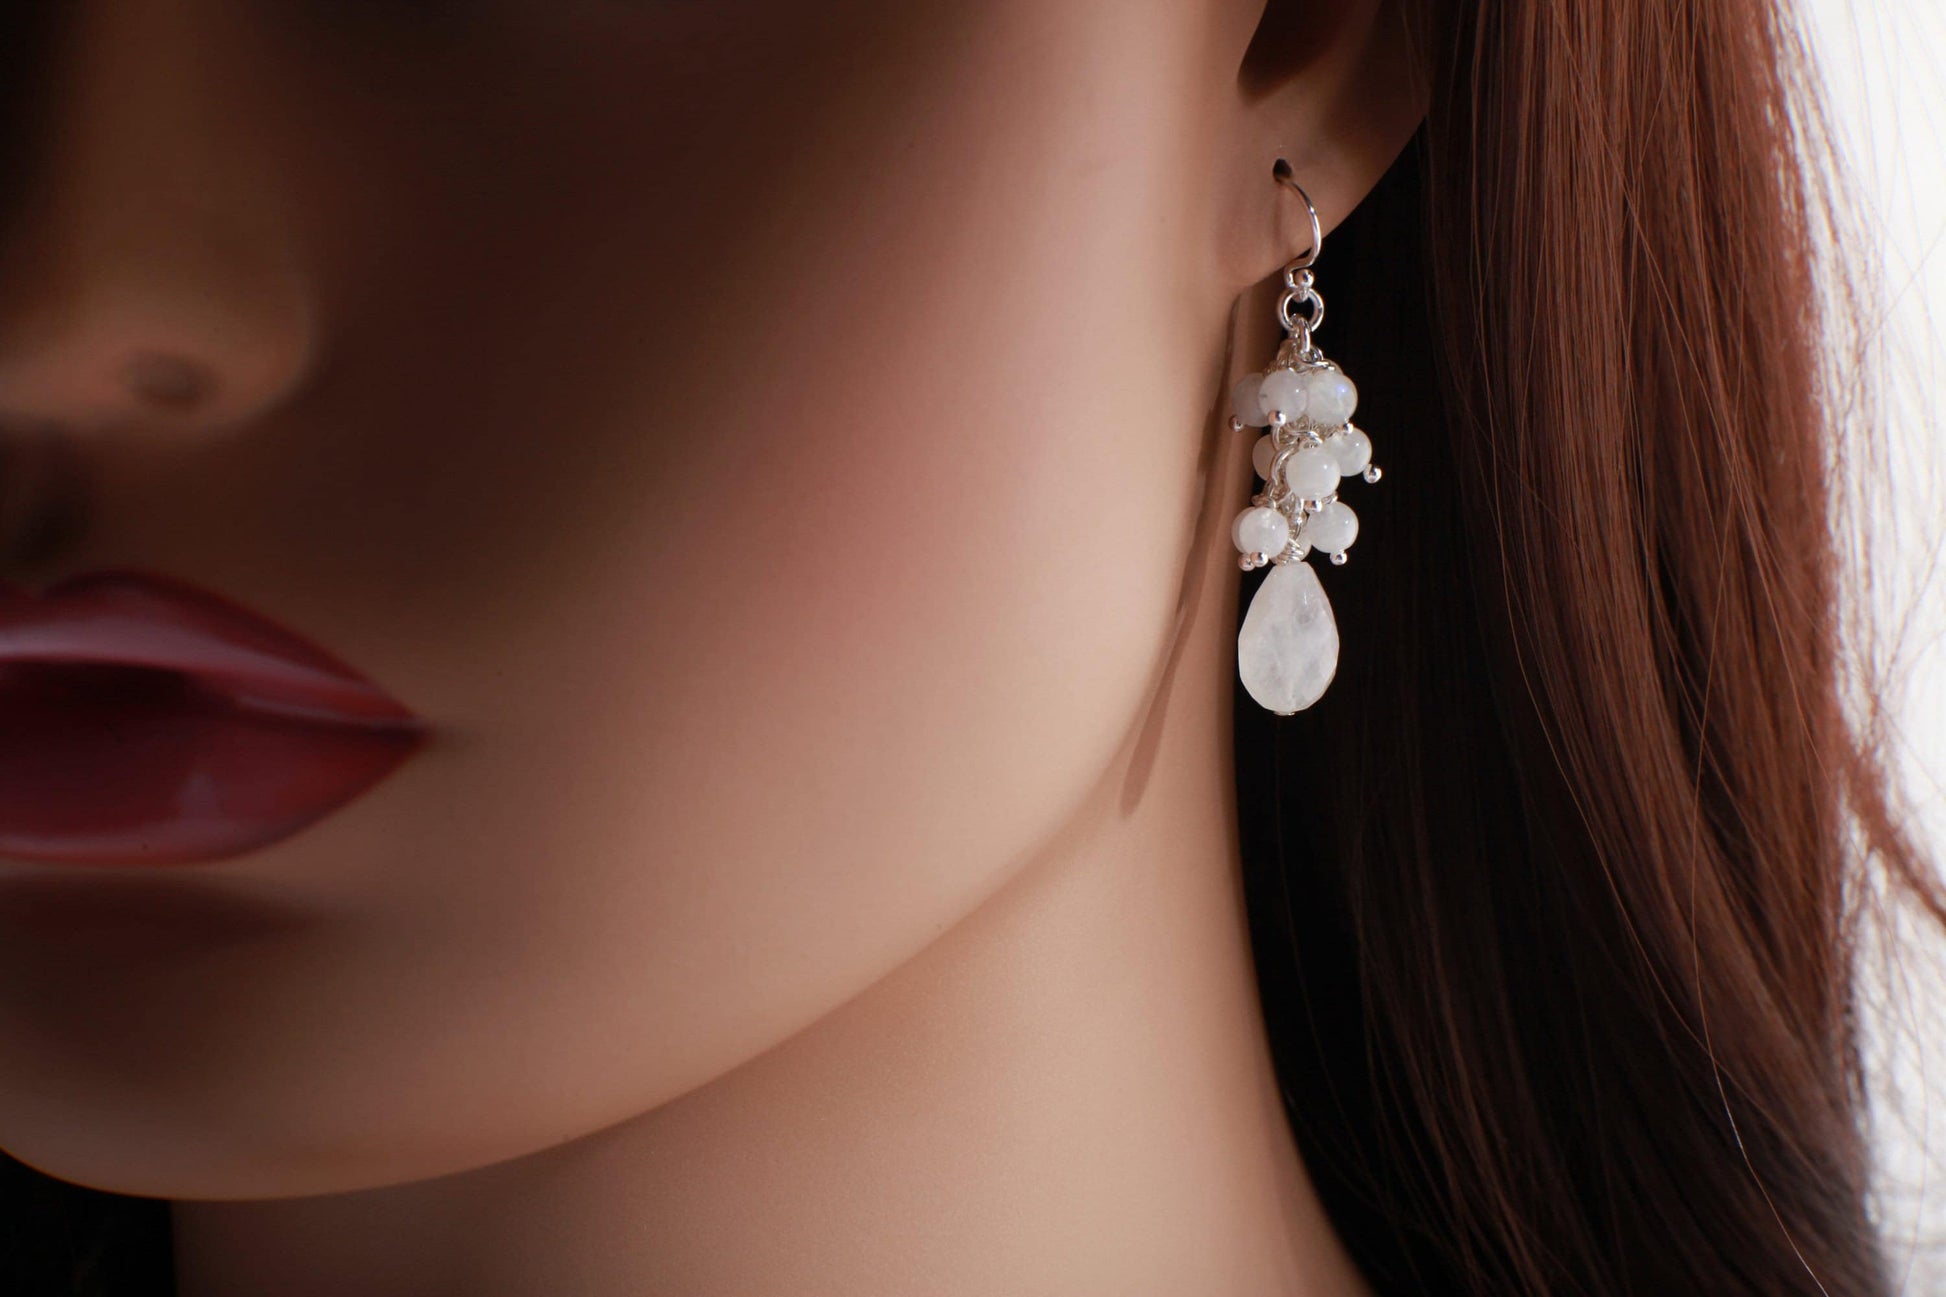 Moonstone Earrings Briolette Teardrop Accents with Moonstone Clusters in 925 Sterling Silver Ear Wire, Gemstone Stateme Earring Bridal Gift